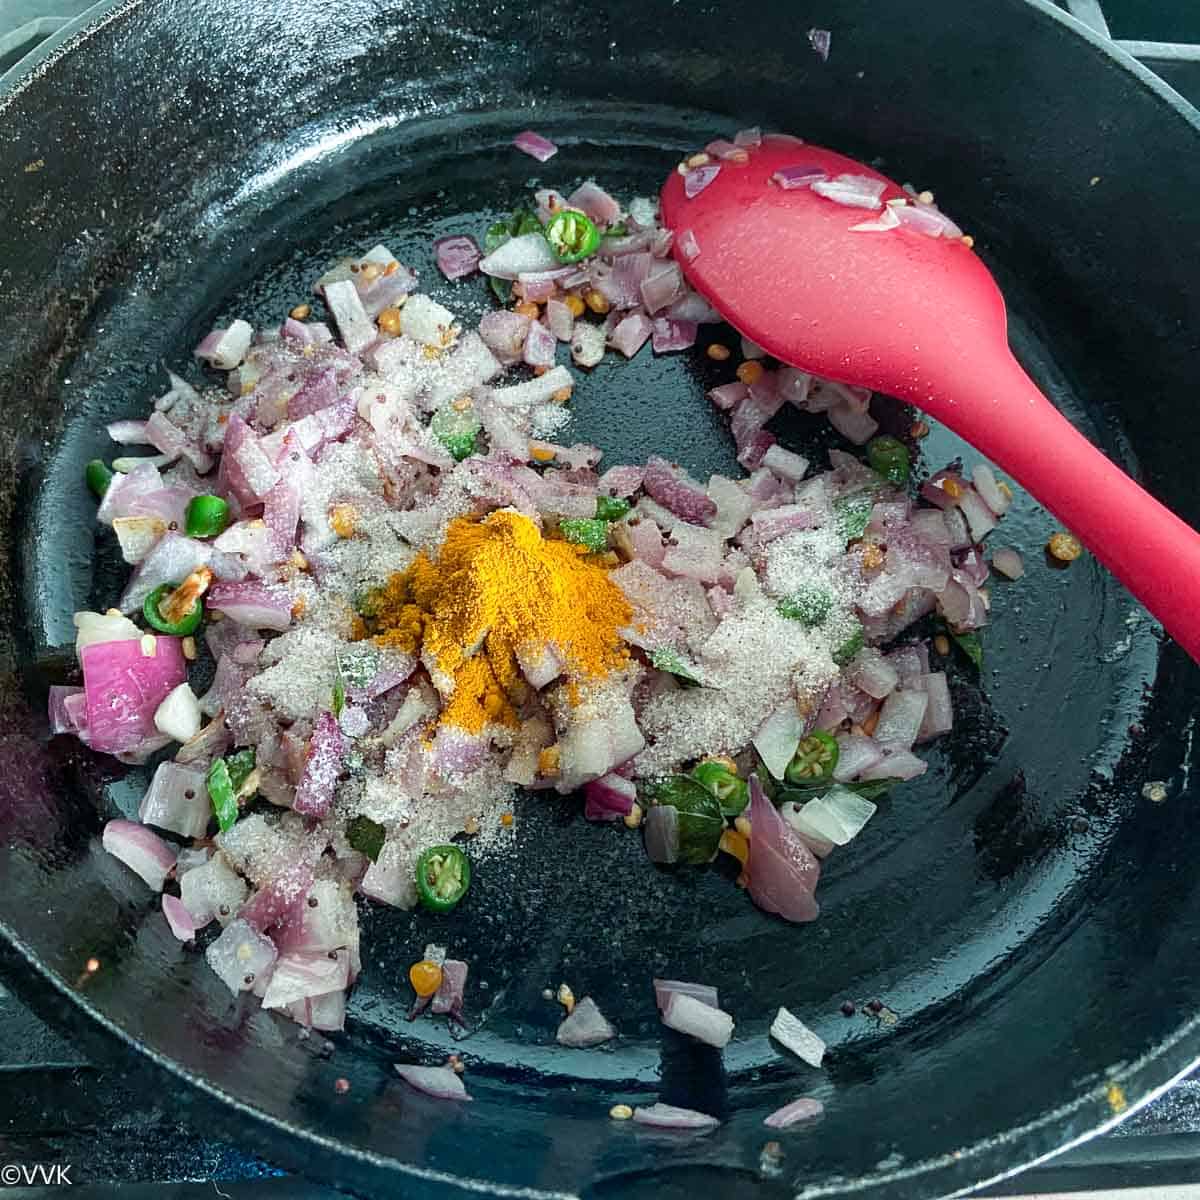 sauteed onions with salt and turmeric powder added